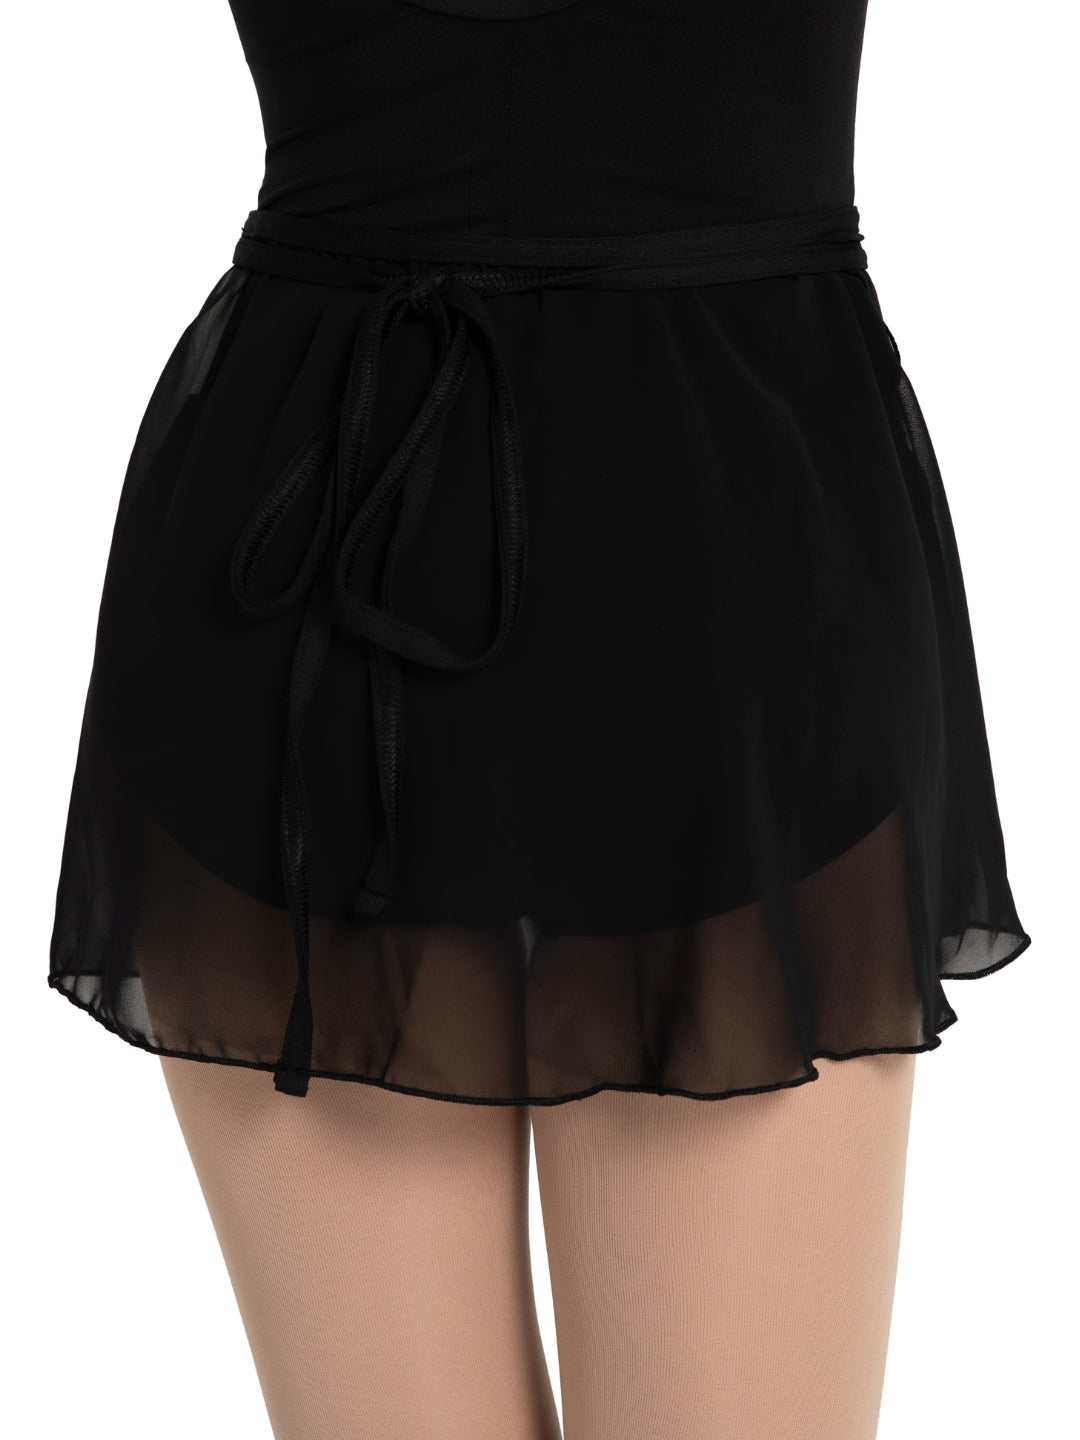 Capezio Wrap Skirt Child SE1057C